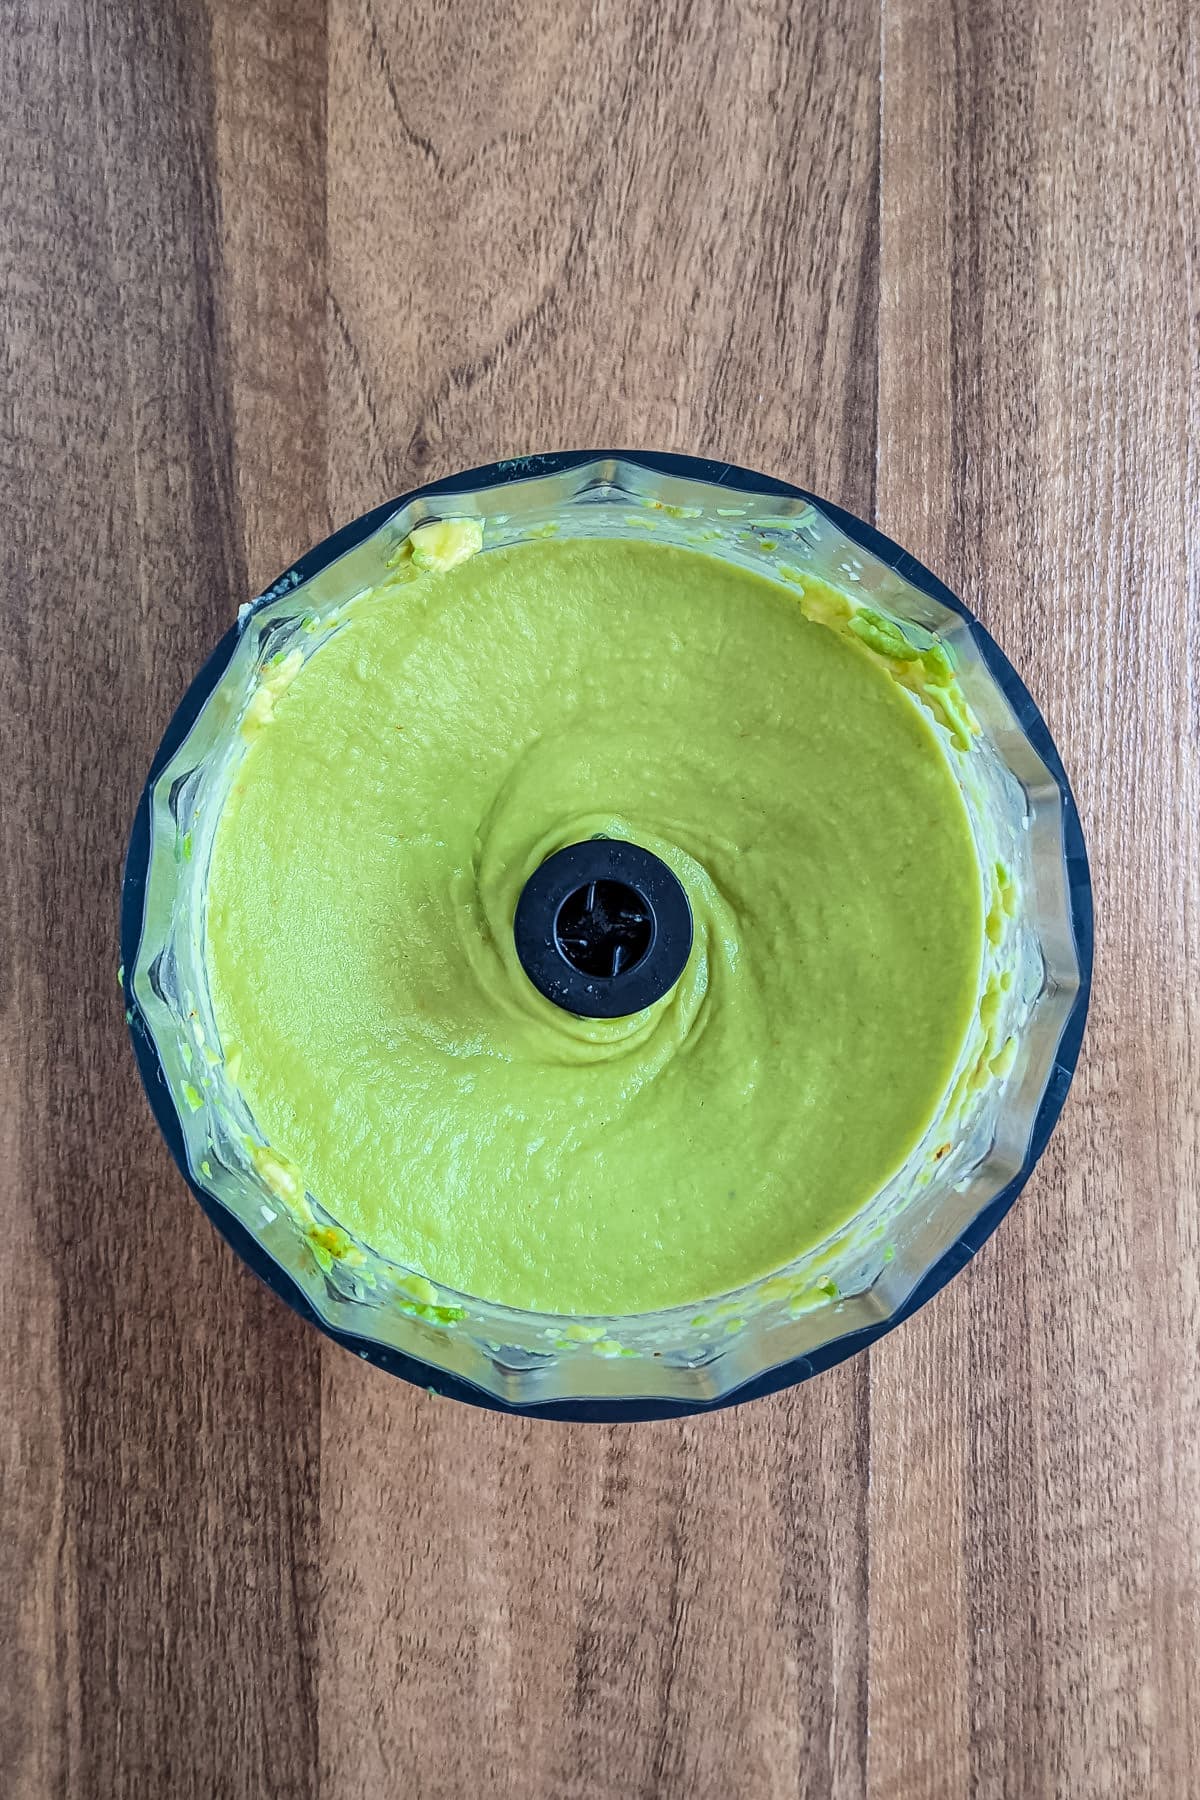 Mixing the creamy avocado sauce in a blender.